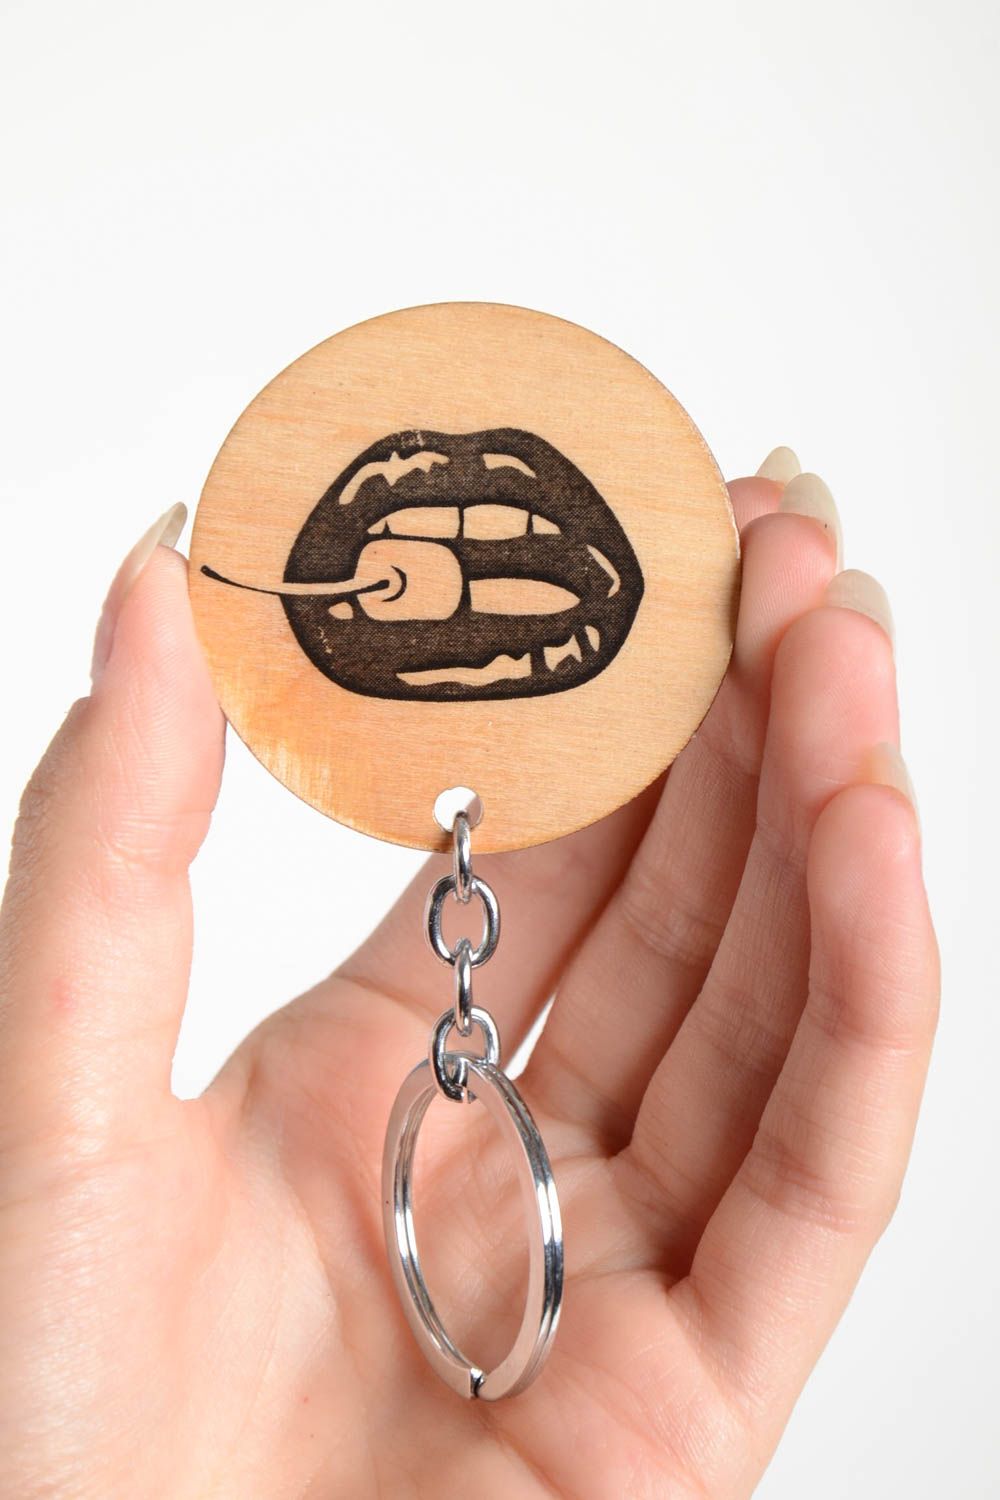 Designer accessories handmade wooden key chain designer keyrings gifts for girls photo 2